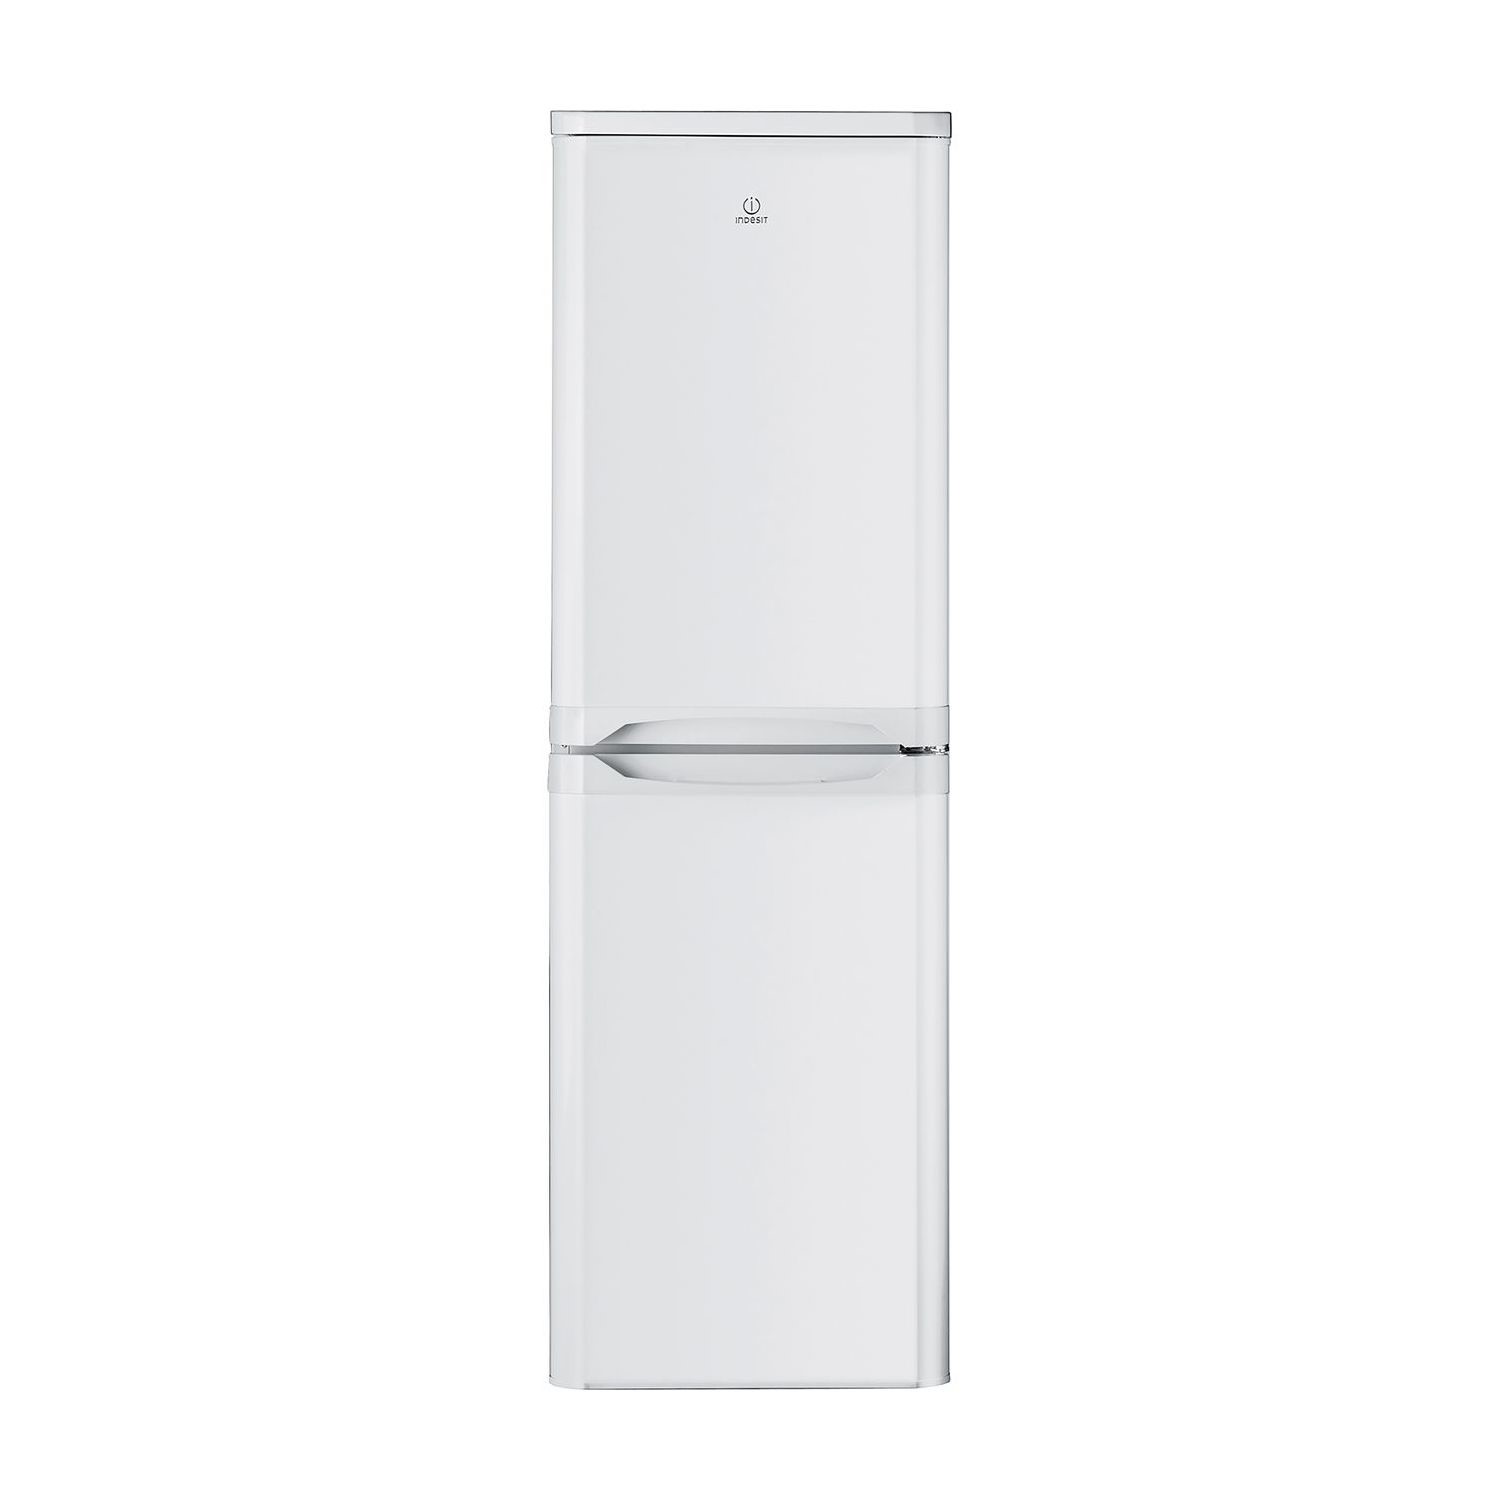 Indesit 235 Litre 50/50 Freestanding Fridge Freezer - White